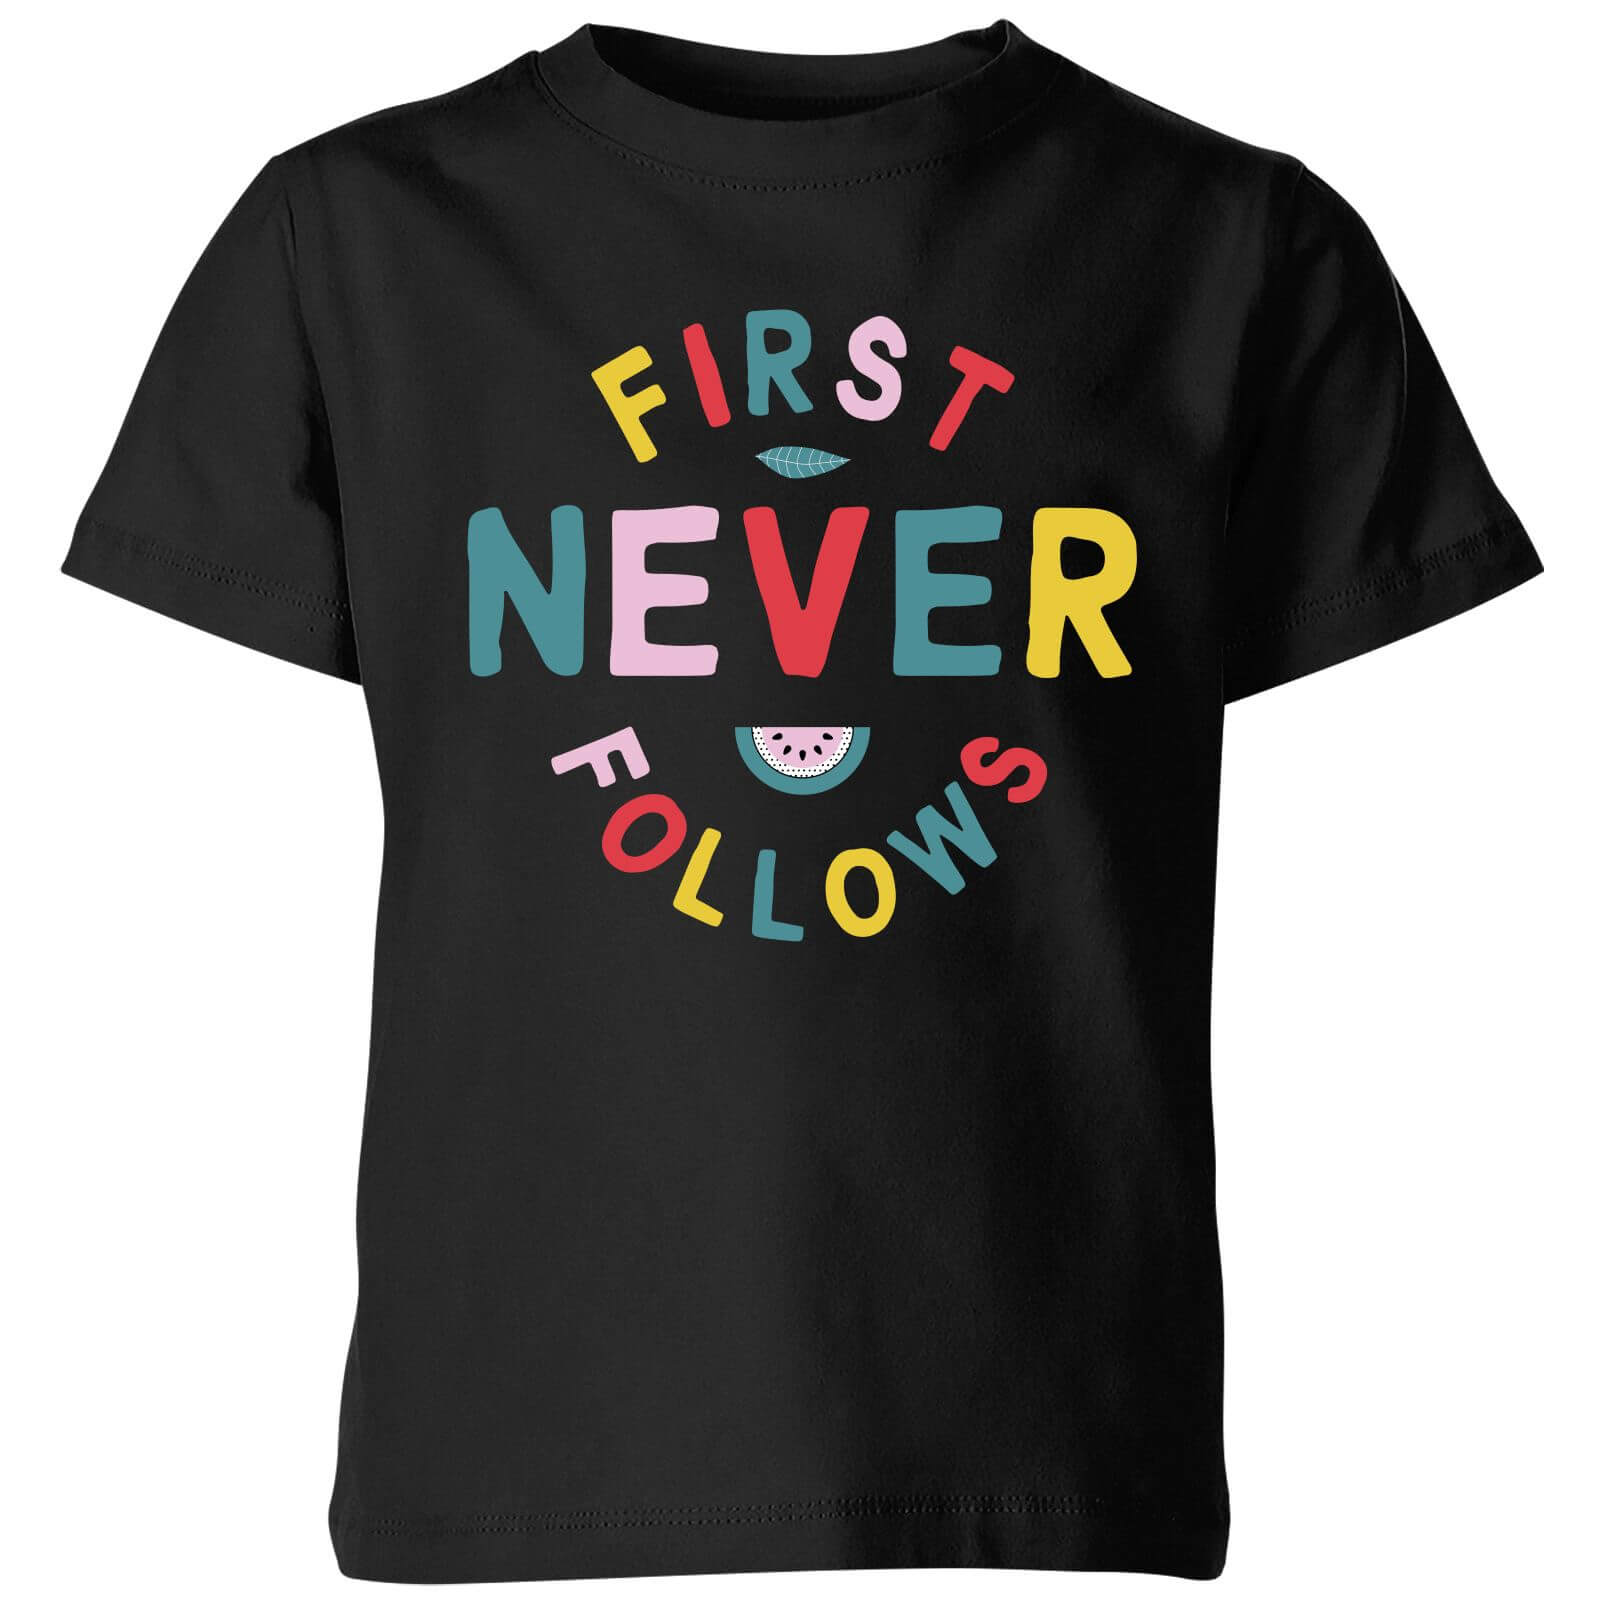 My Little Rascal First Never Follows Kids' T-Shirt - Black - 3-4 Years - Black